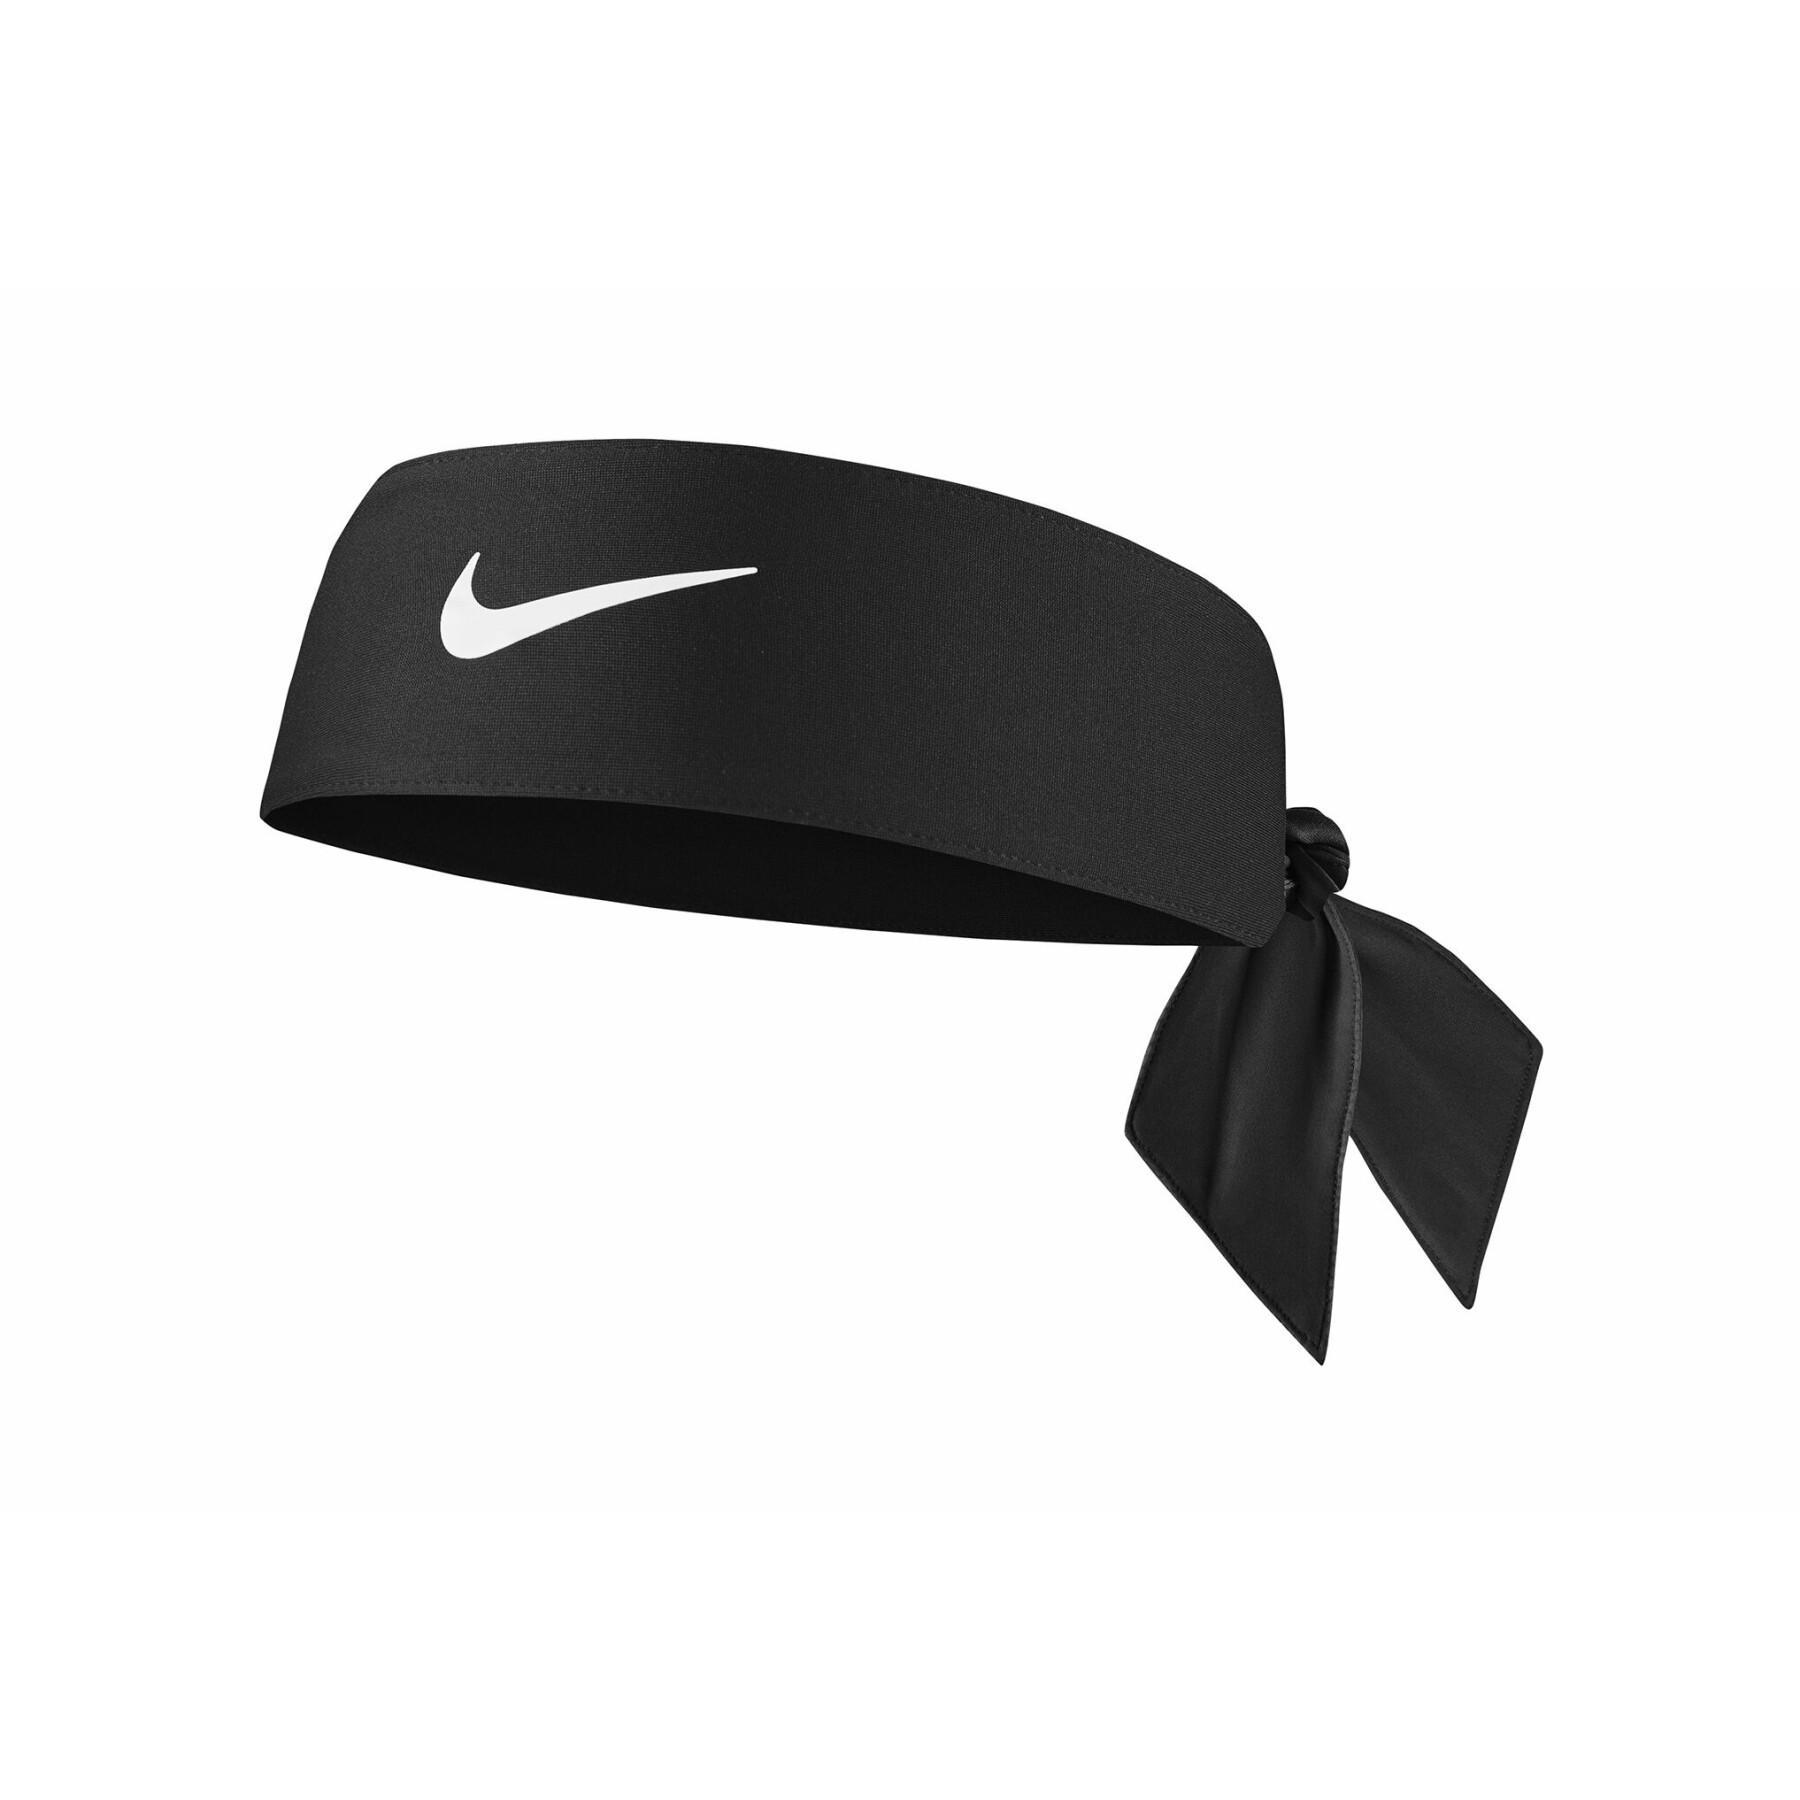 Bandeau Nike dri-fit 4.0 - Nike - Marques - Textile